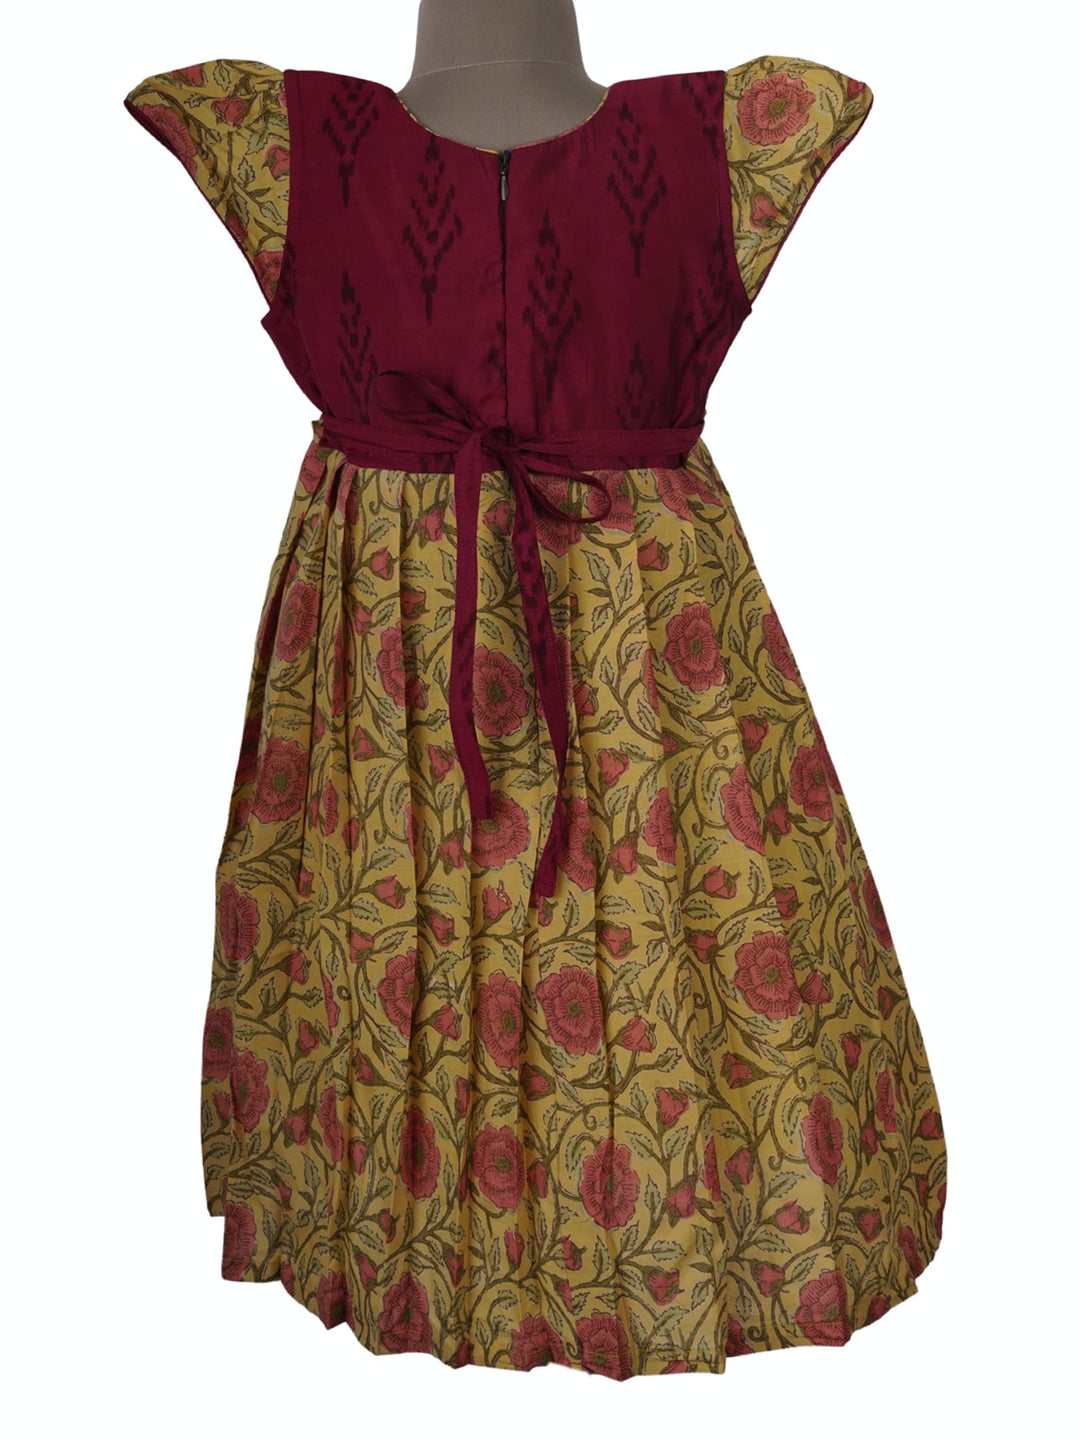 The Nesavu Frocks & Dresses Floral Cotton Dress With Designer Yoke For Baby Girls psr silks Nesavu